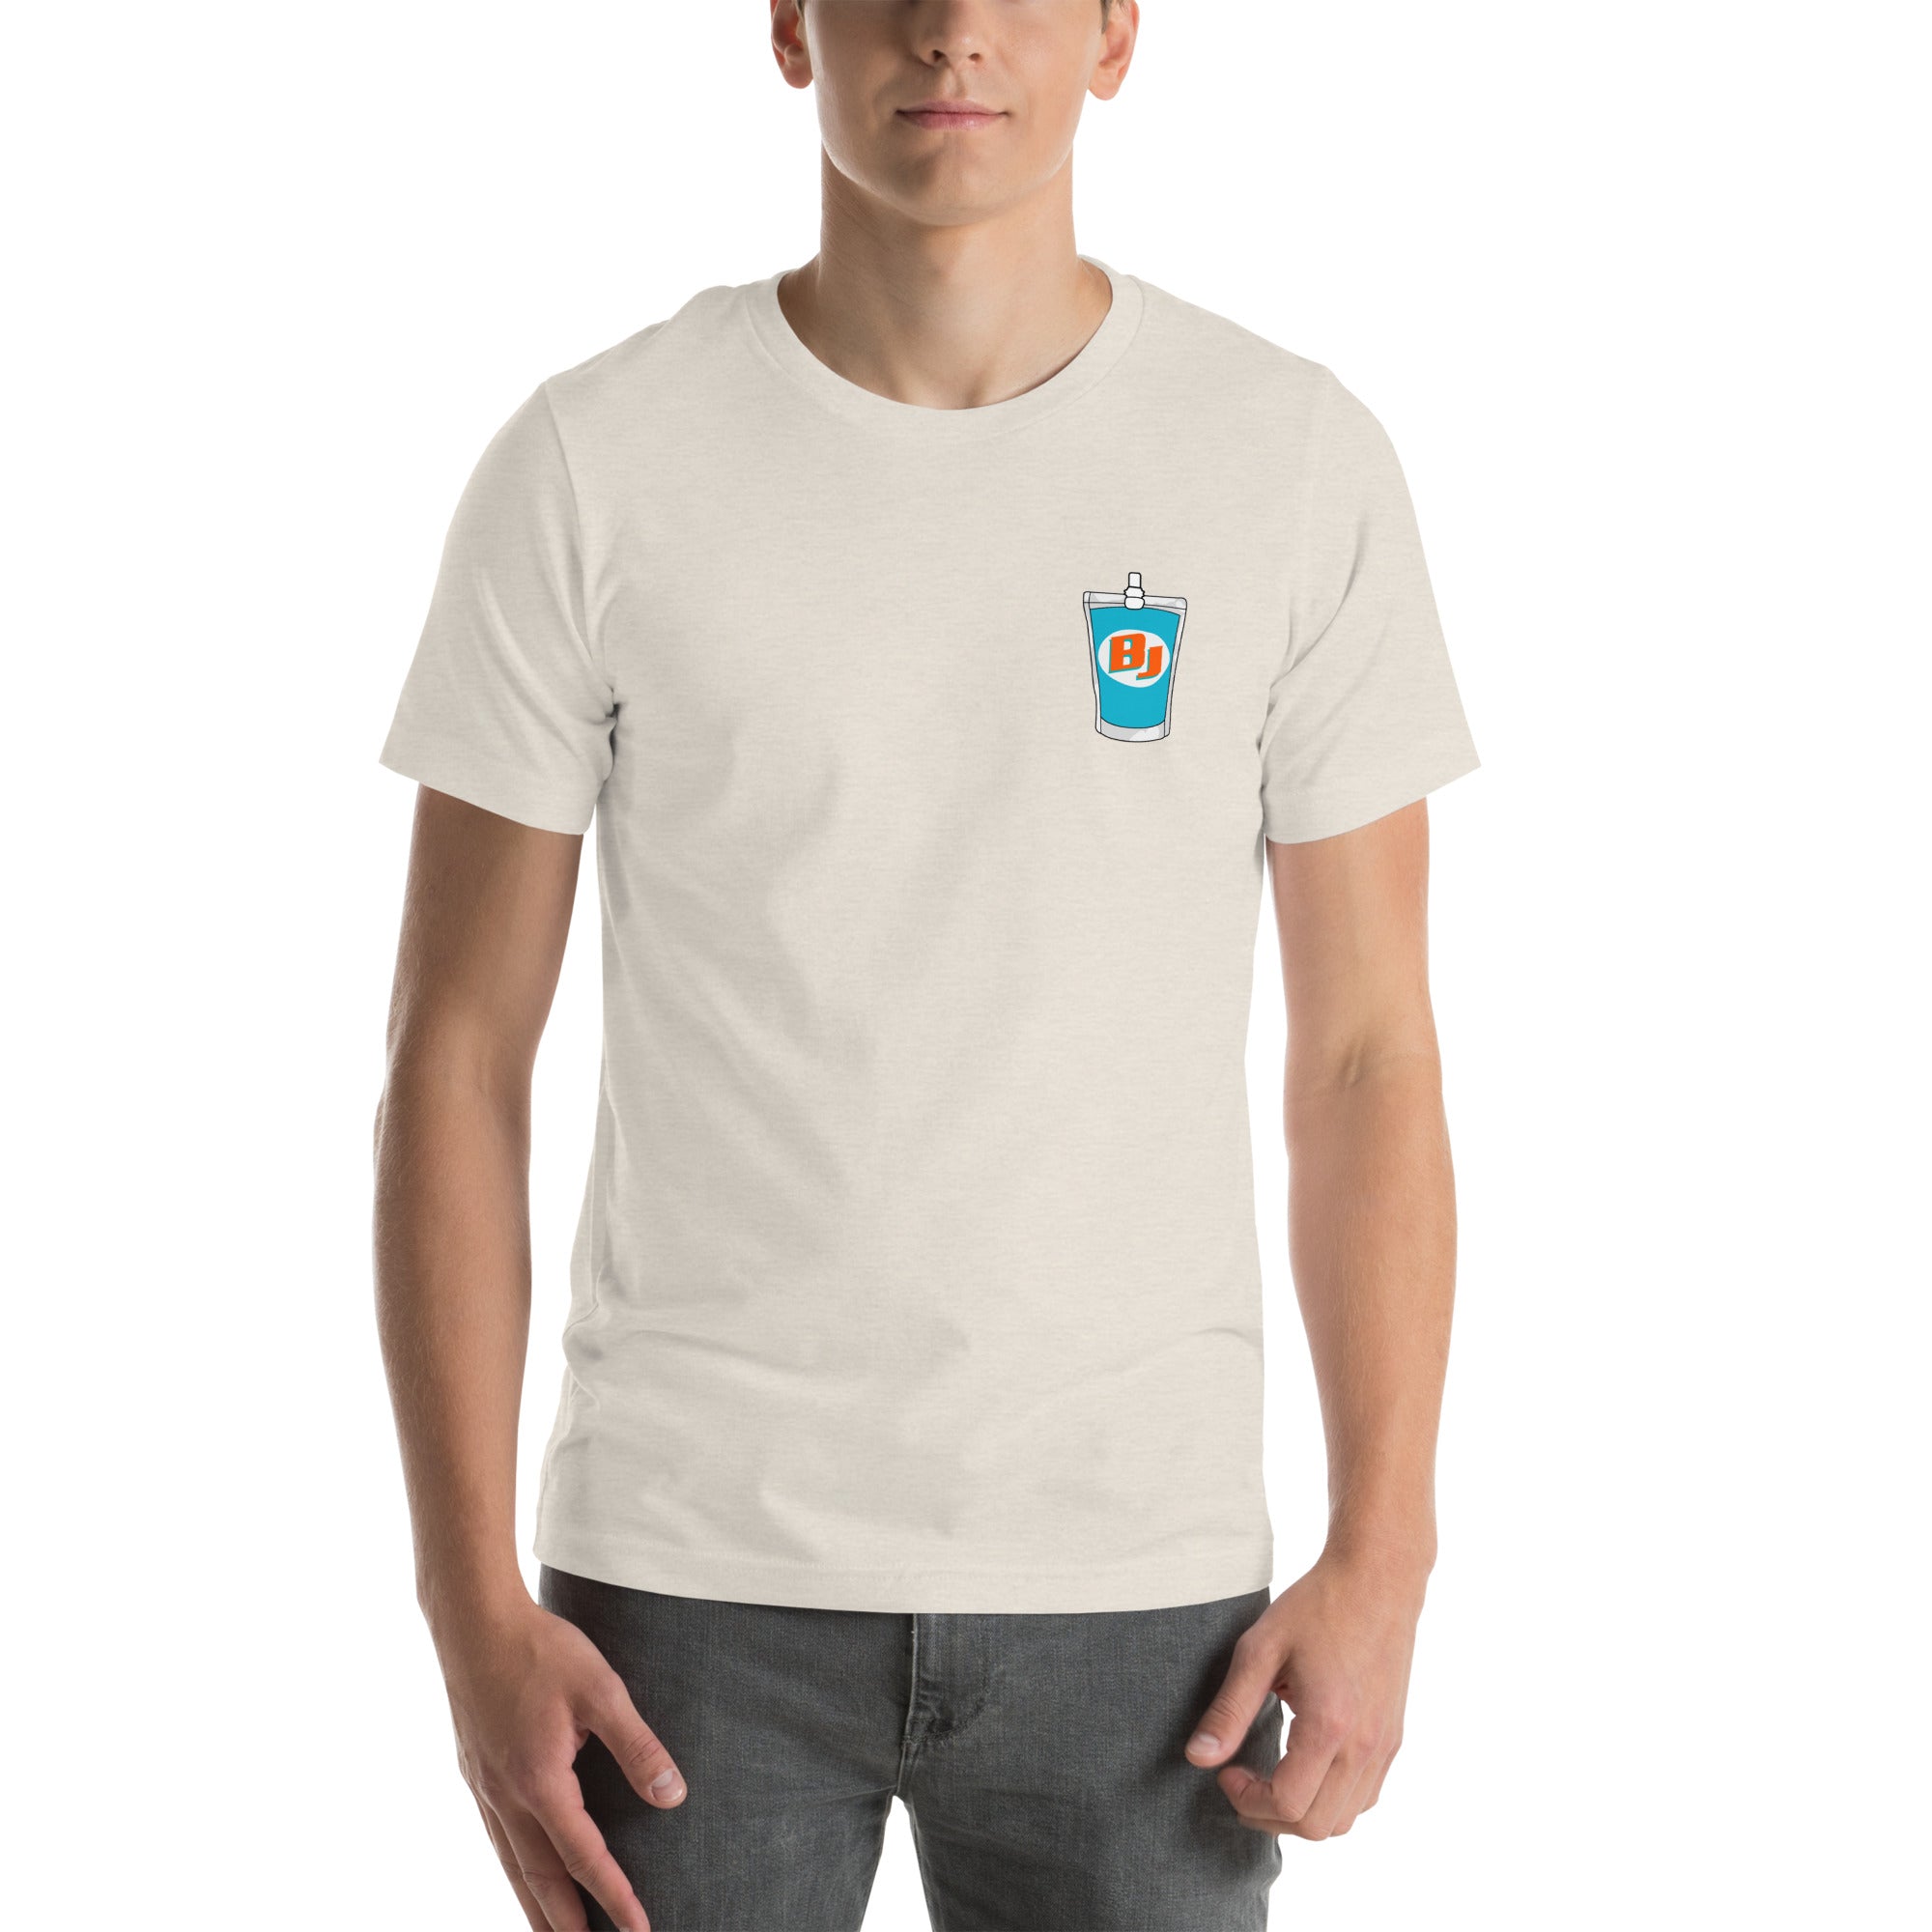 BJ Pouch Slogan T-Shirt